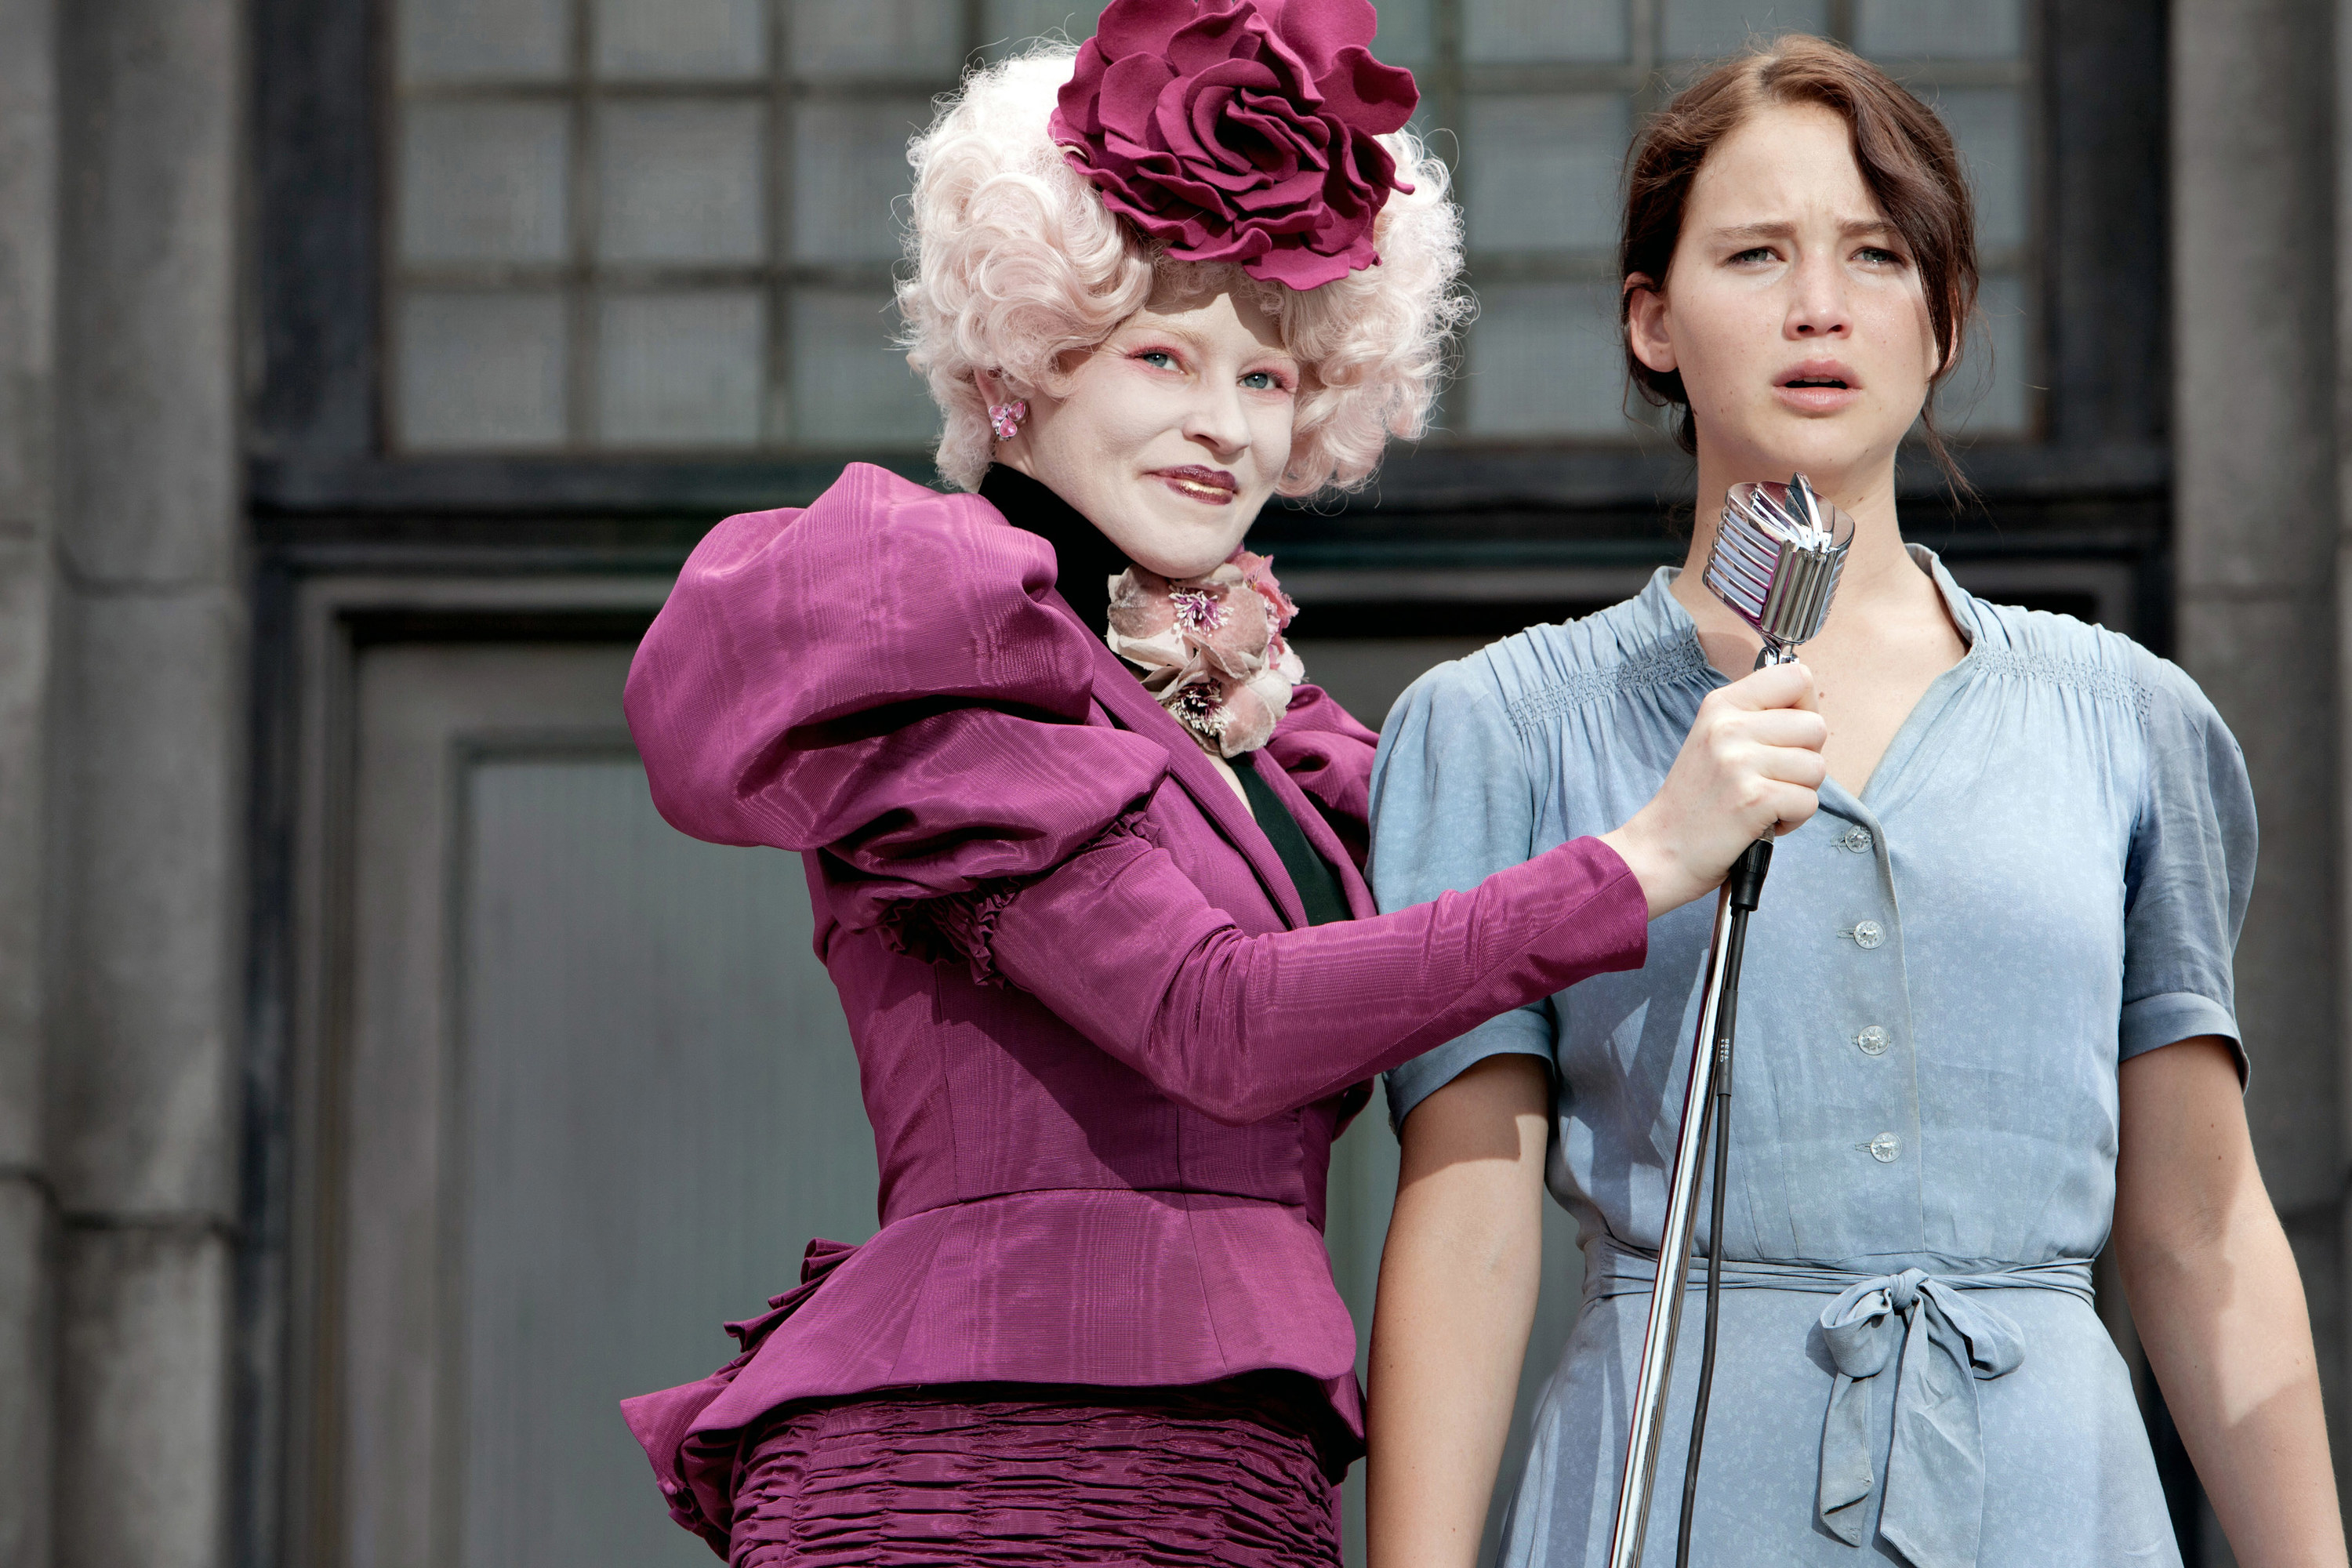 Jennifer as Katniss with Elizabeth Banks as Effie Trinket onstage at a microphone